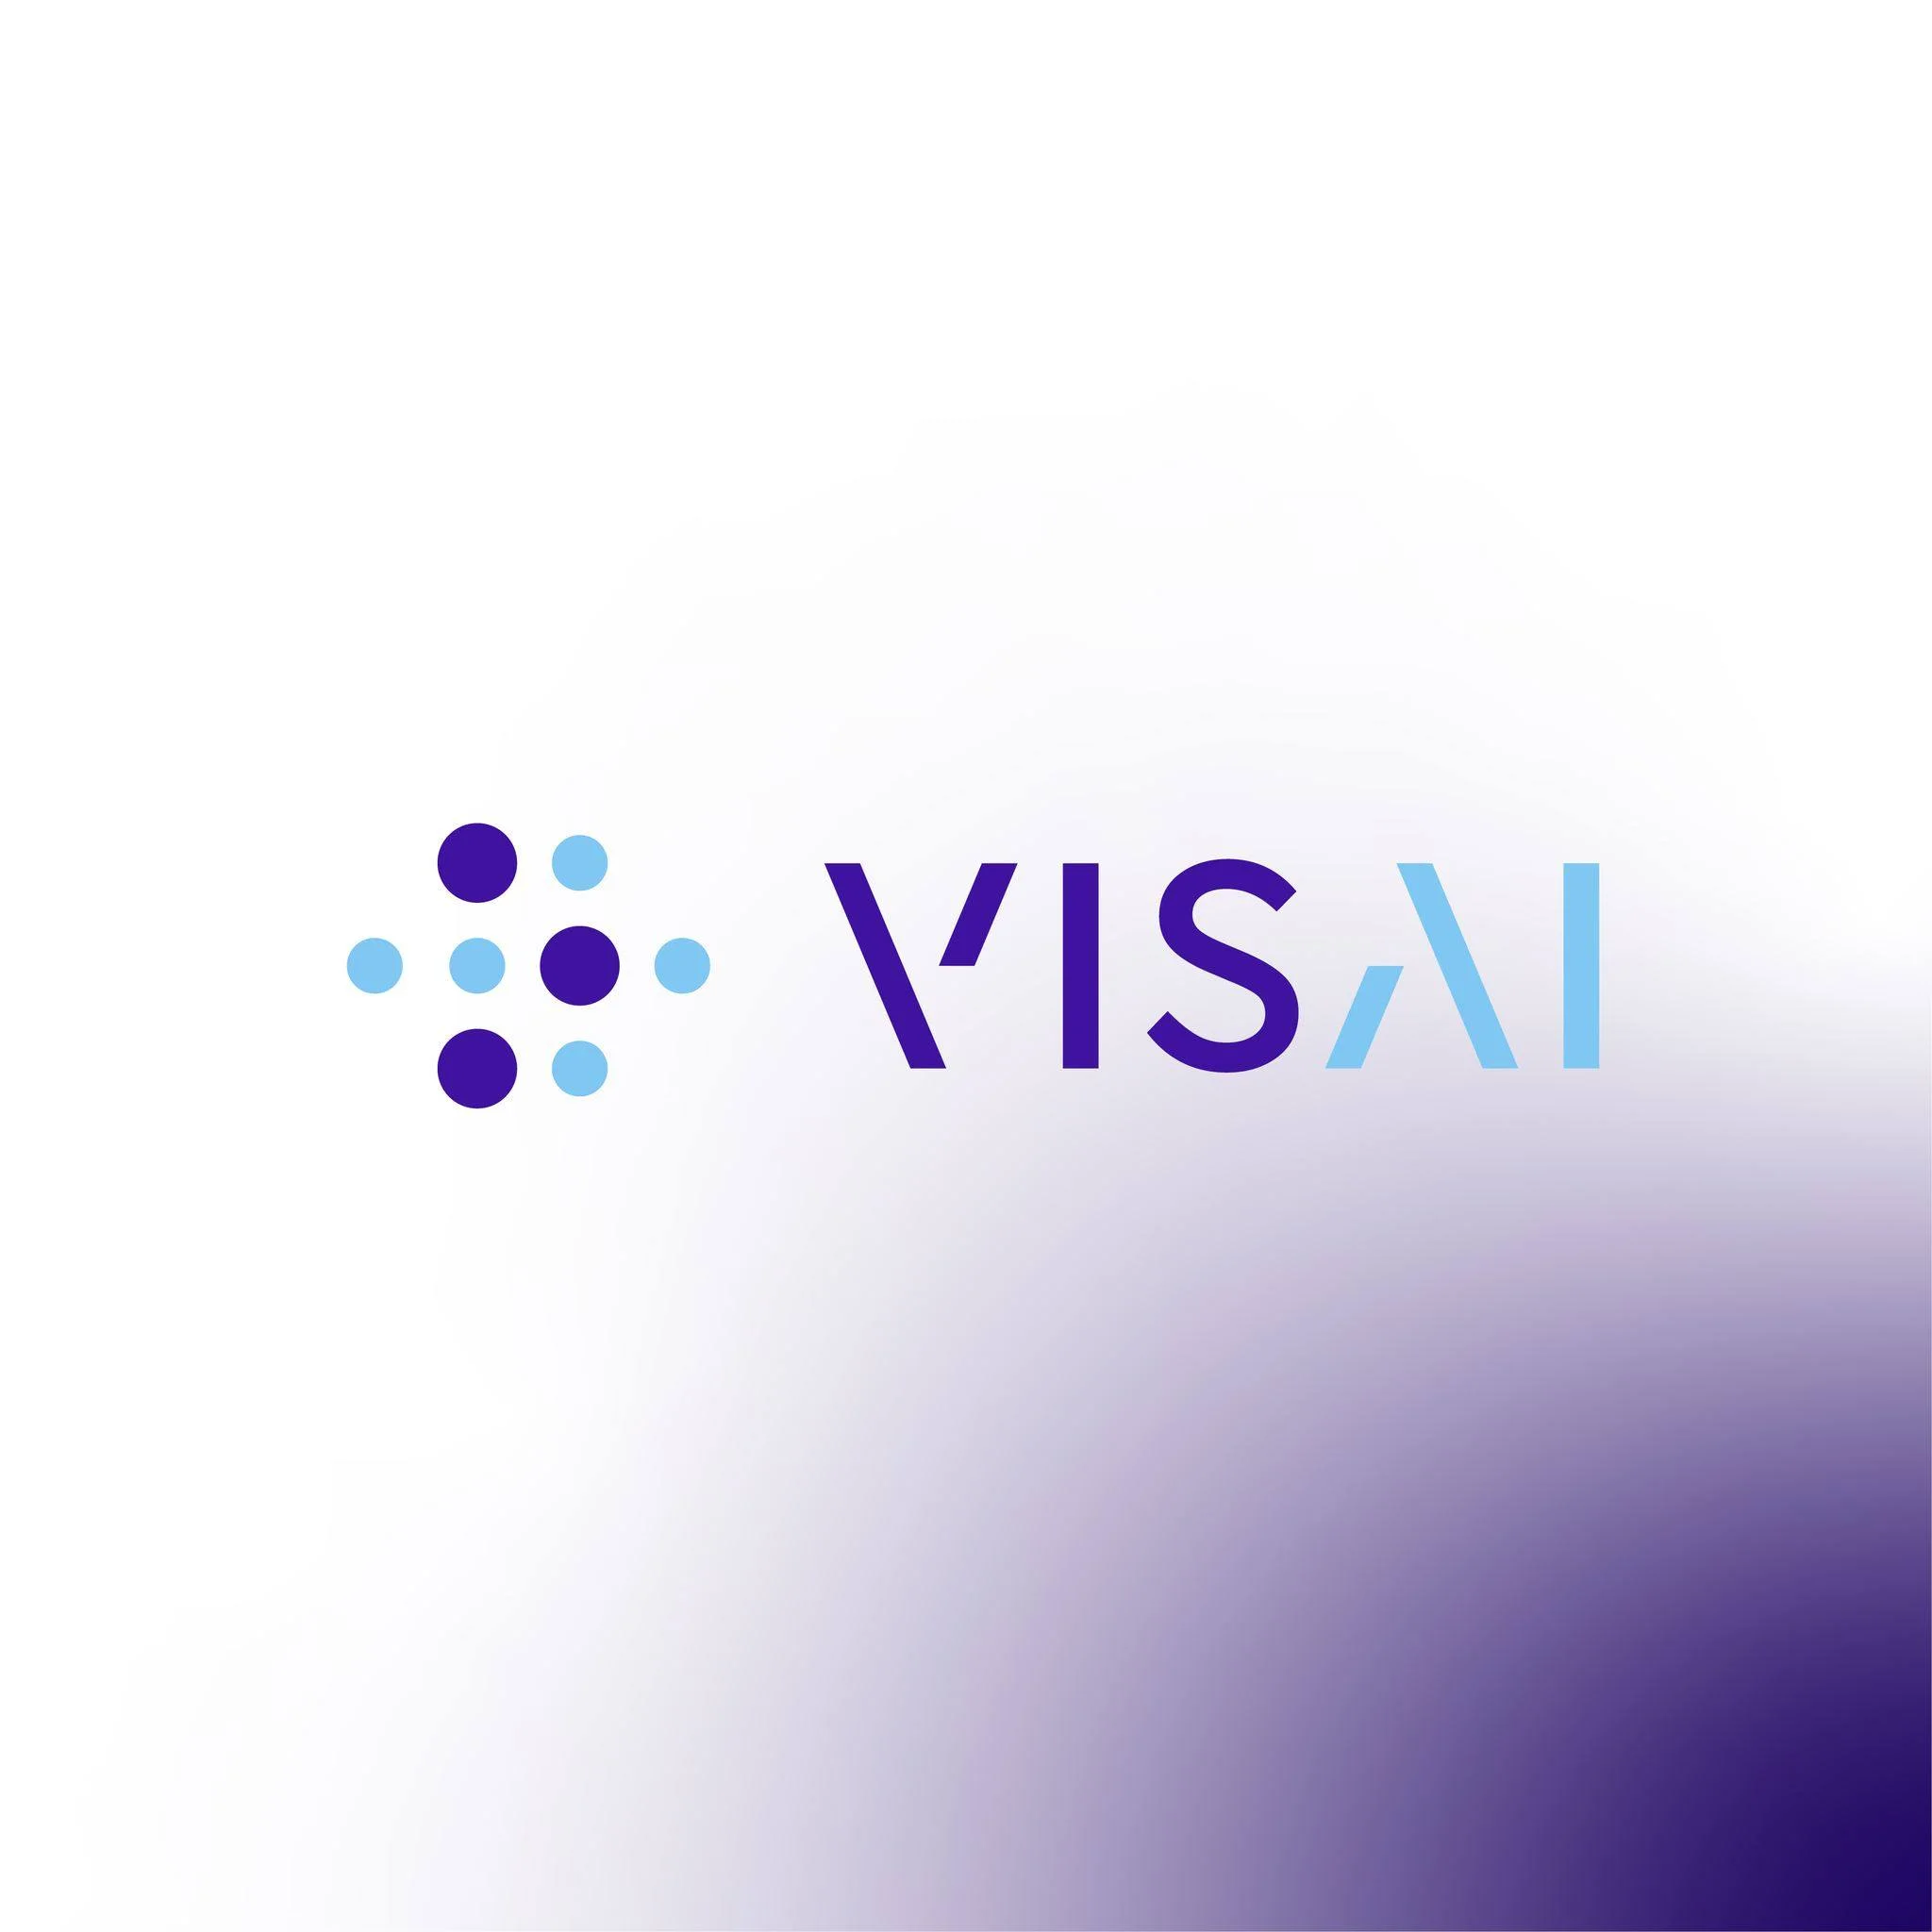 depa จับมือ VISTEC เปิดตัว “VISAI” พัฒนา AI-enabled Solutions ในแนวคิด AI for Everyone